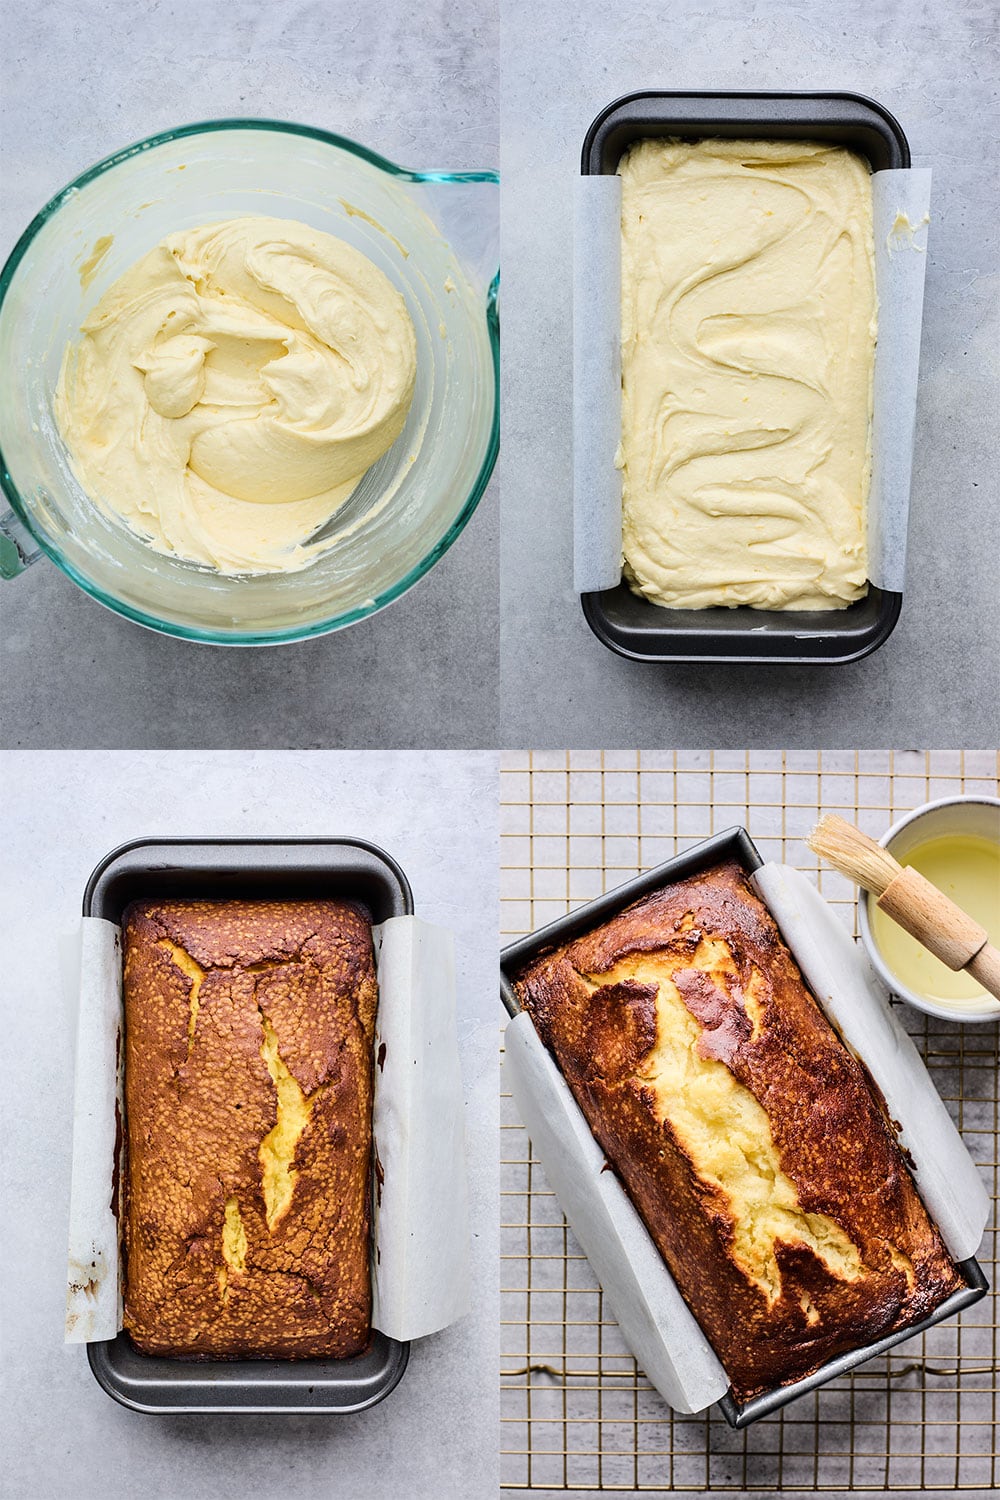 Lemon Pound Cake Step By Step Instructions part 2